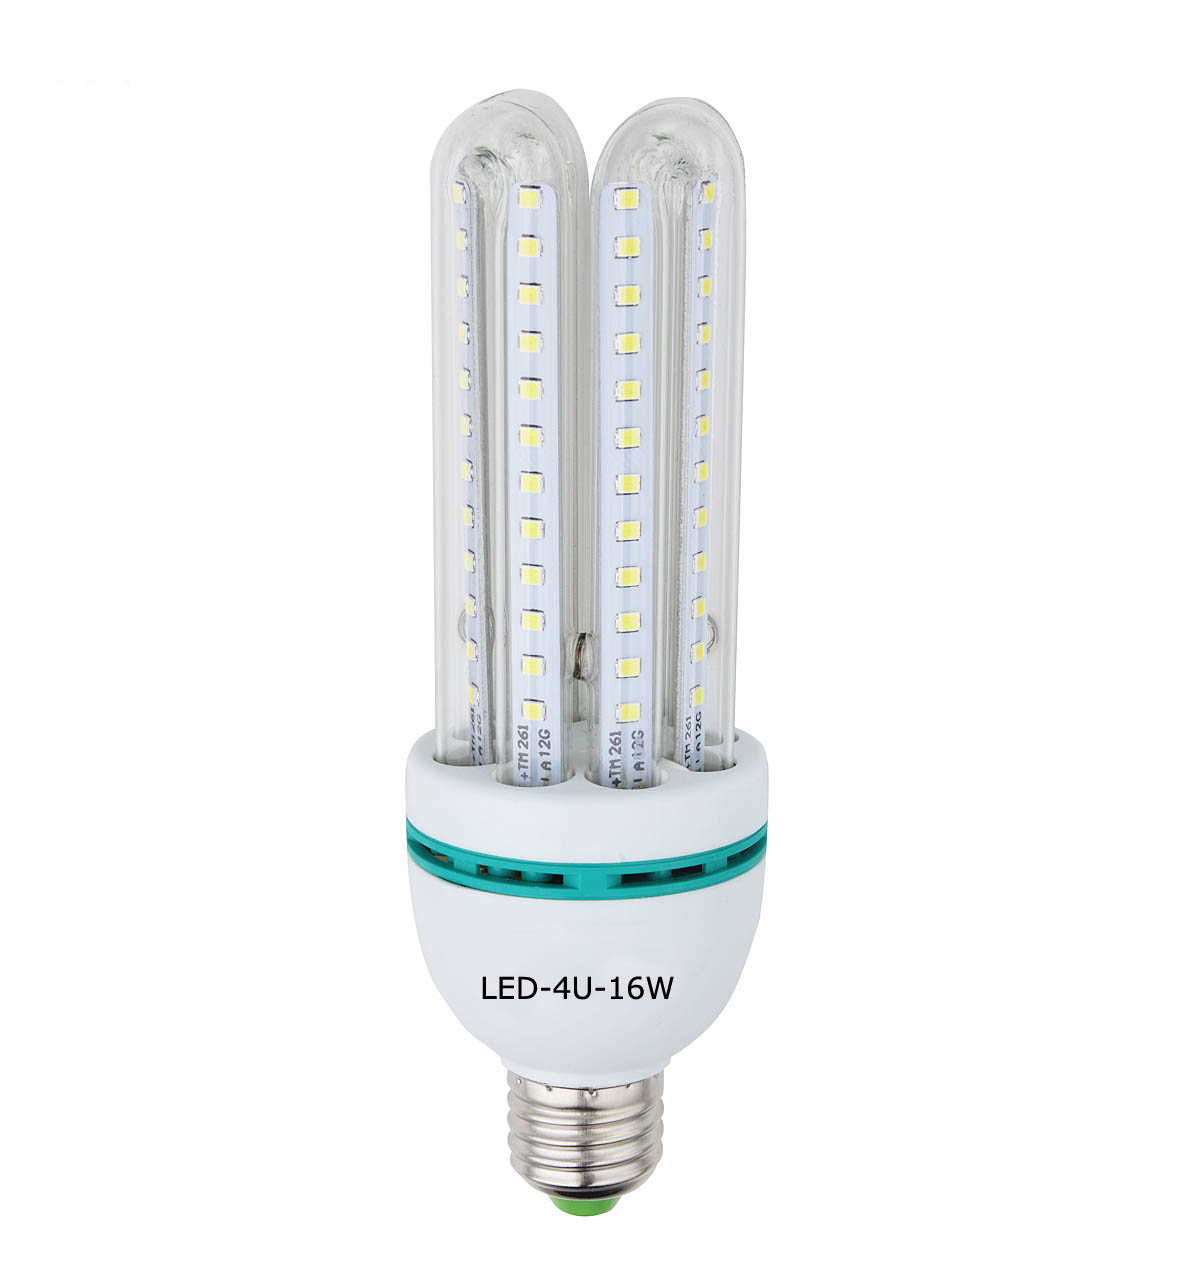 LED corn bulbs 4U 16W